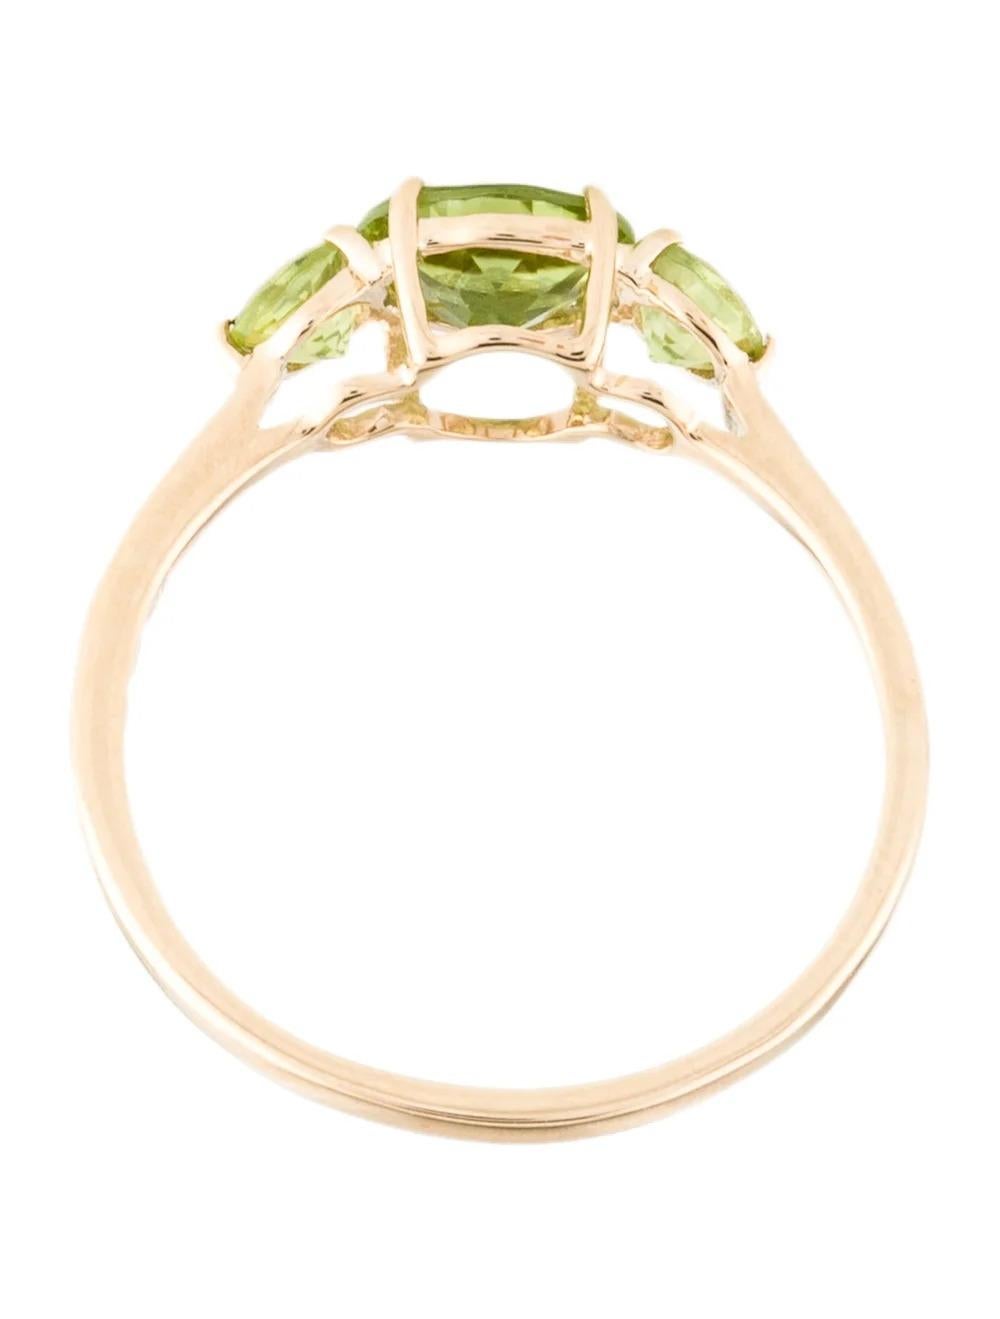 Women's 14K Peridot Cocktail Ring Size 6.75: Vibrant Green Gemstone, Elegant Yellow Gold For Sale